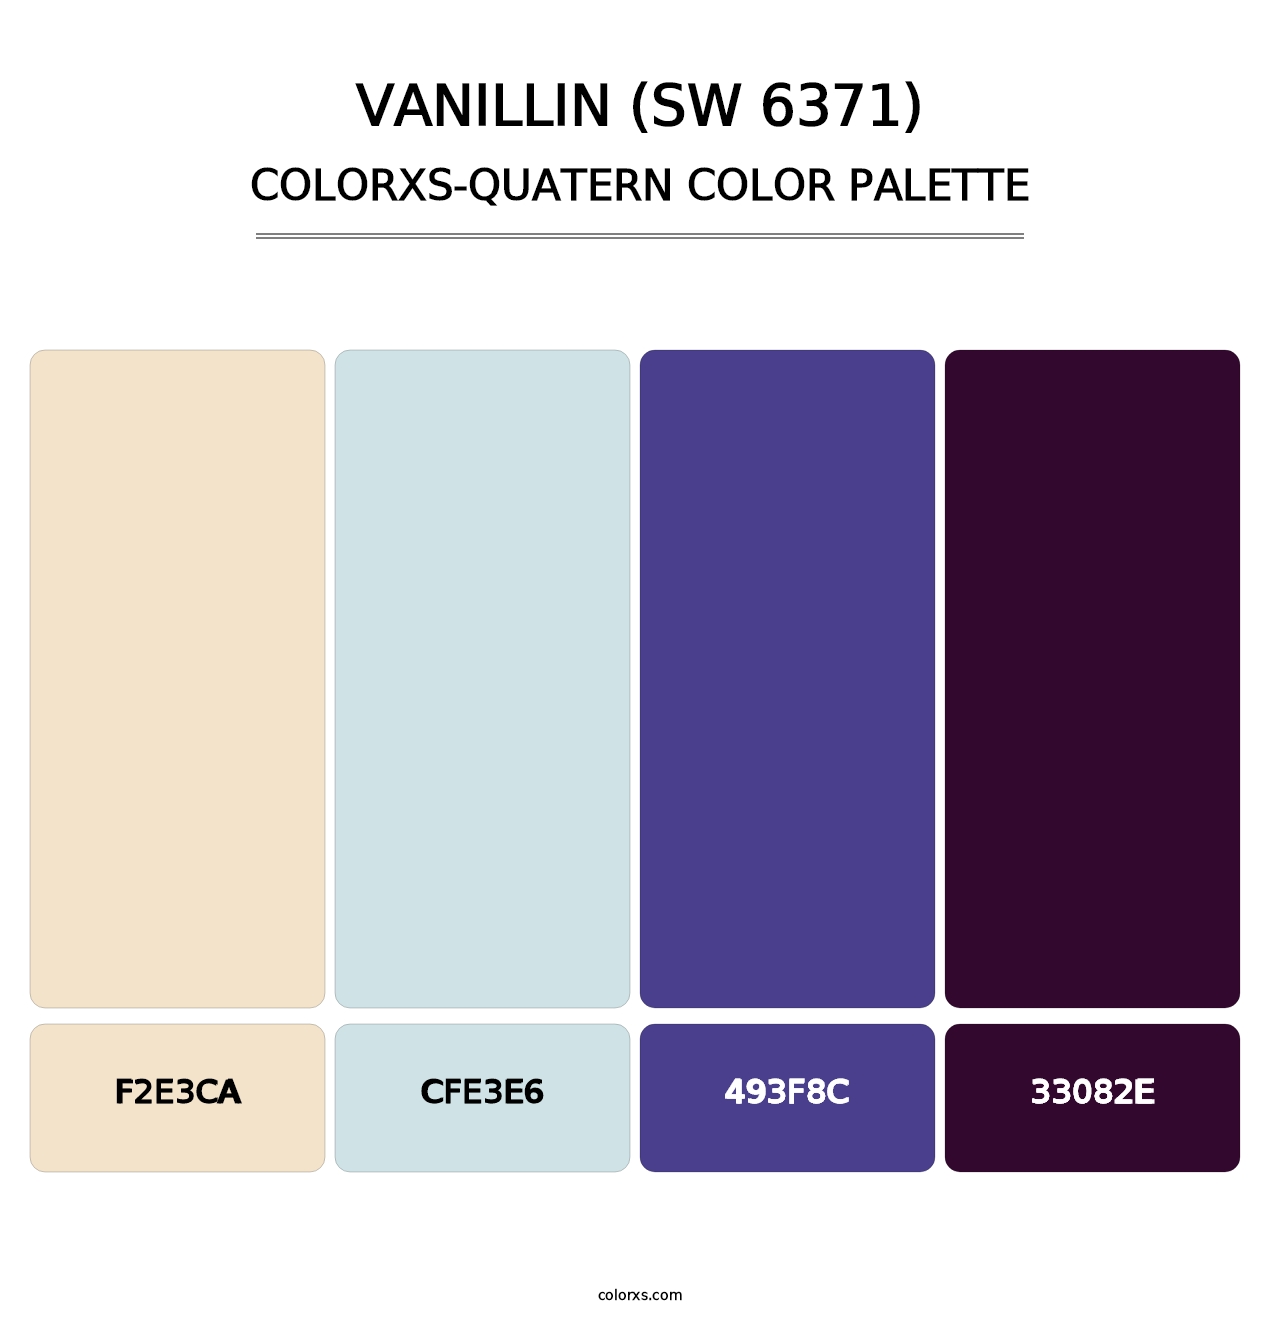 Vanillin (SW 6371) - Colorxs Quatern Palette